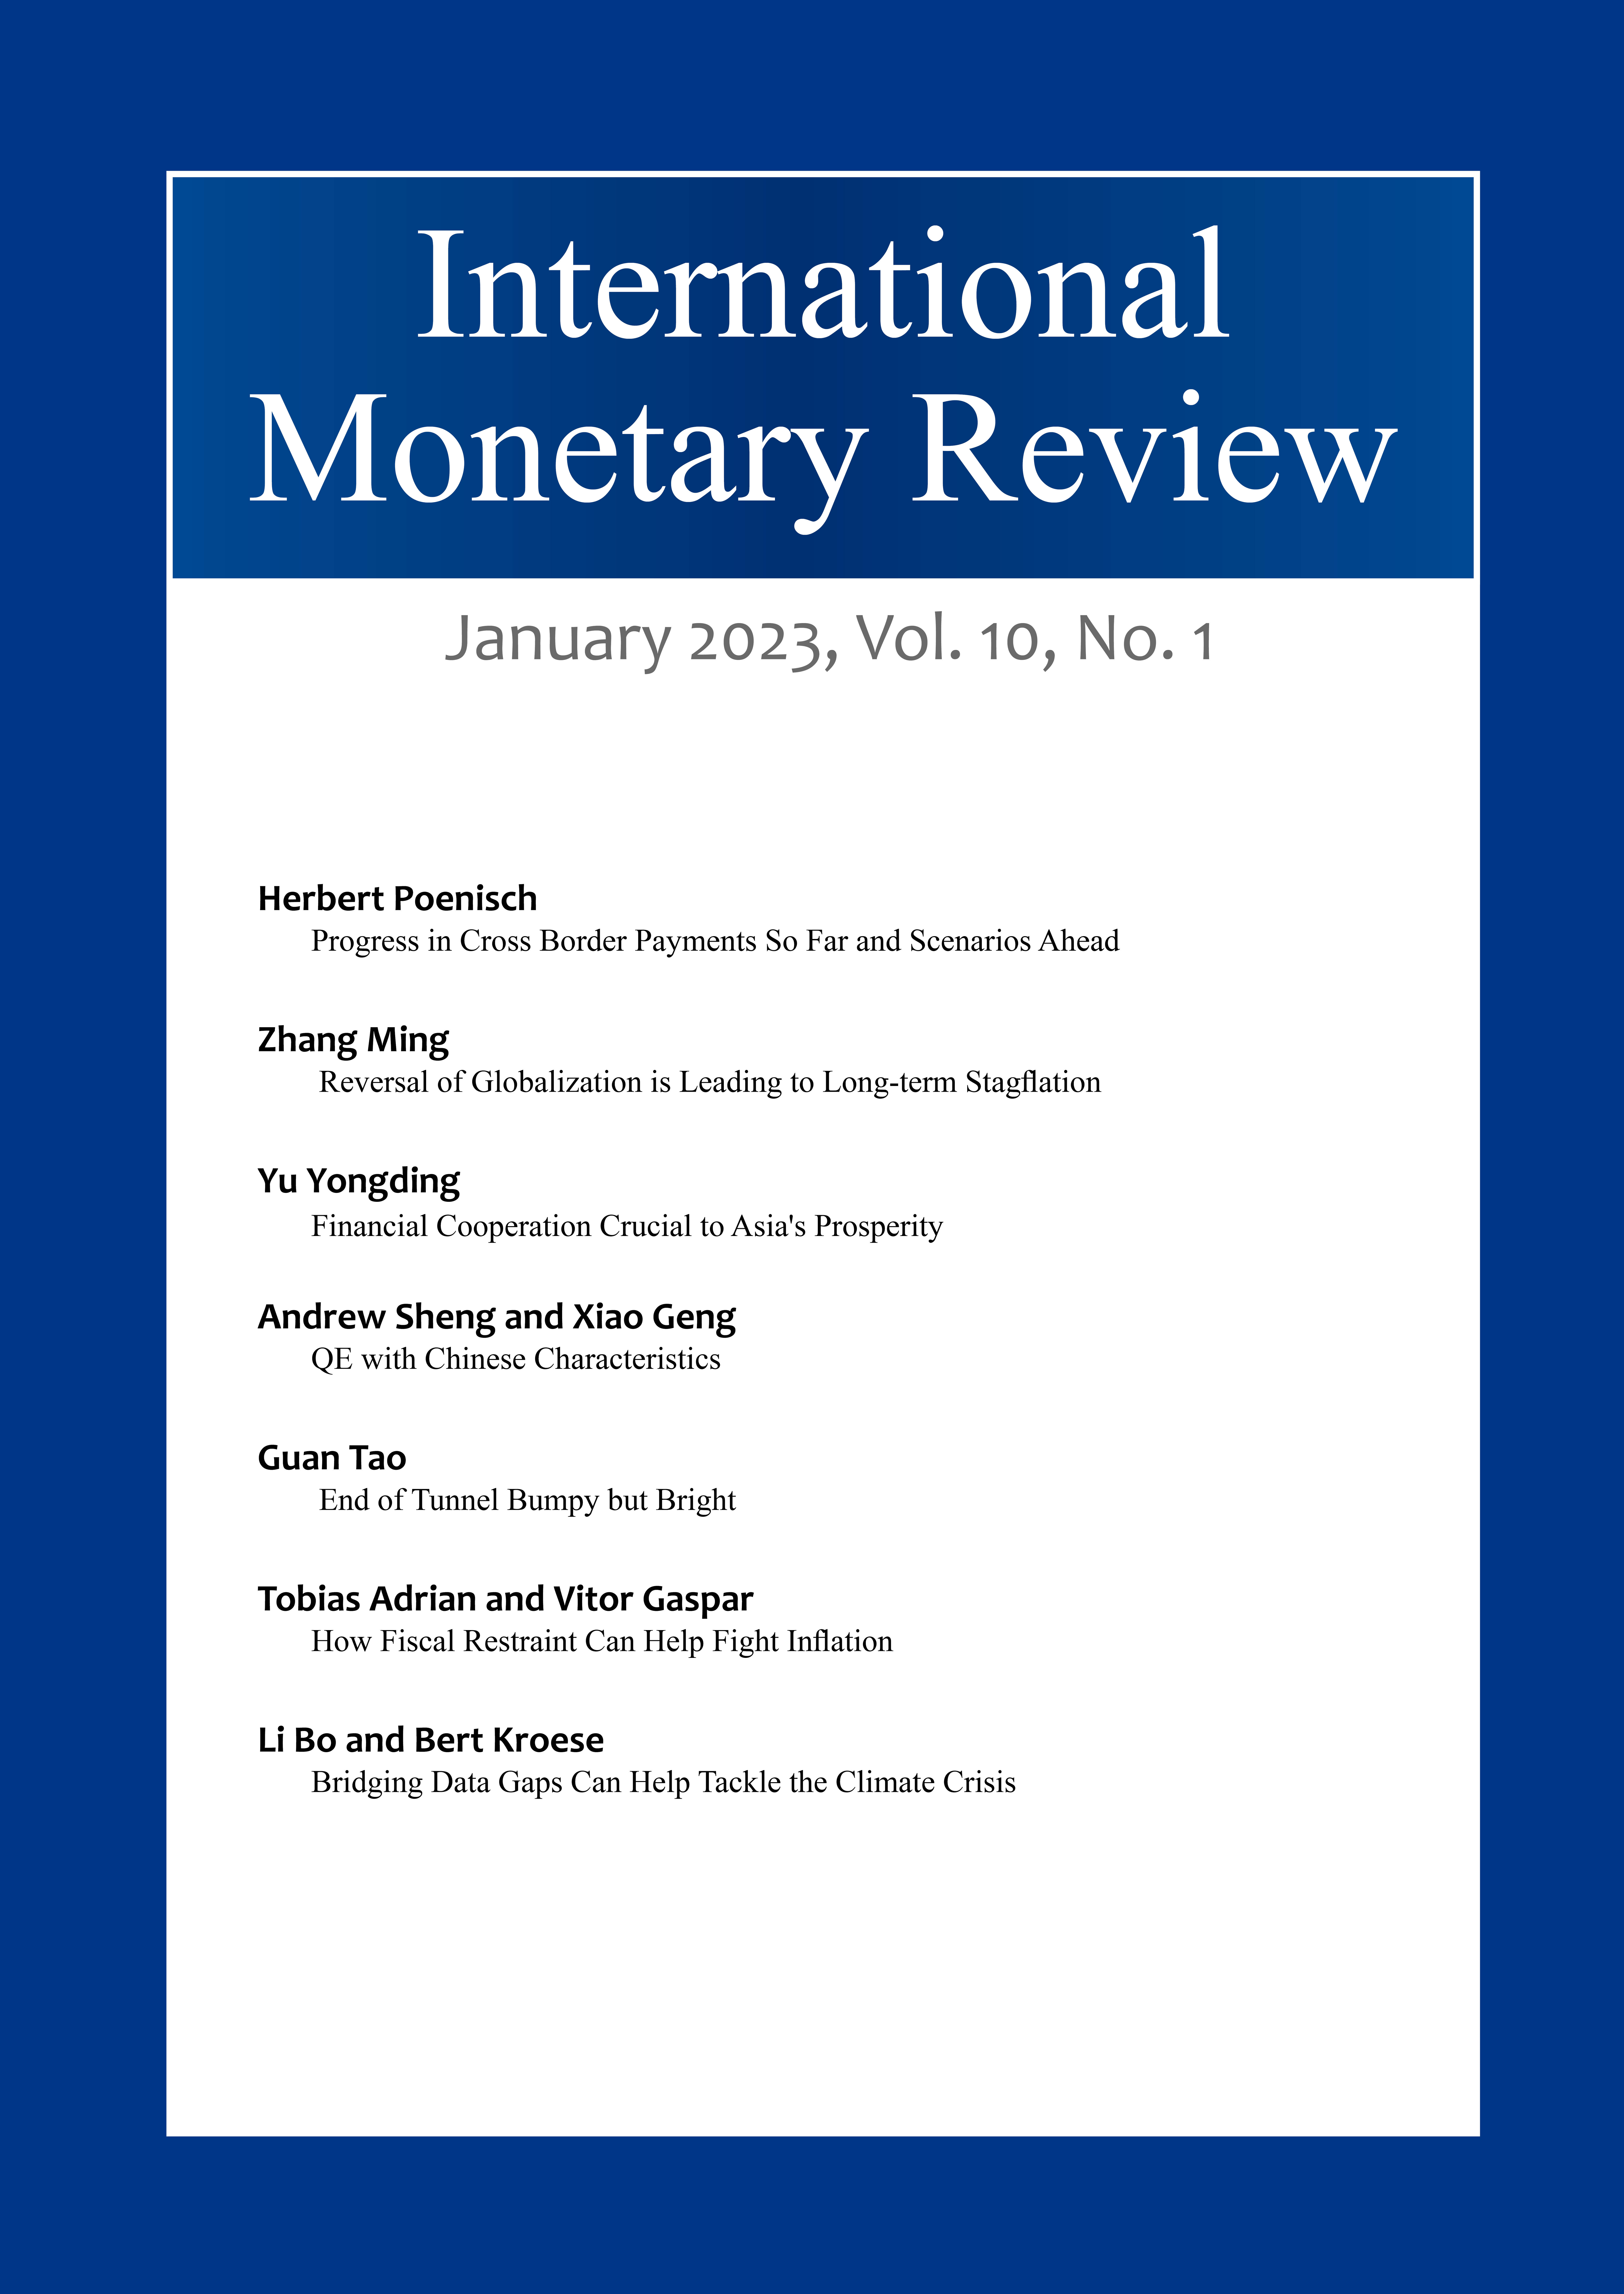 International Monetary Review, January 2023, Vol. 10 No. 1